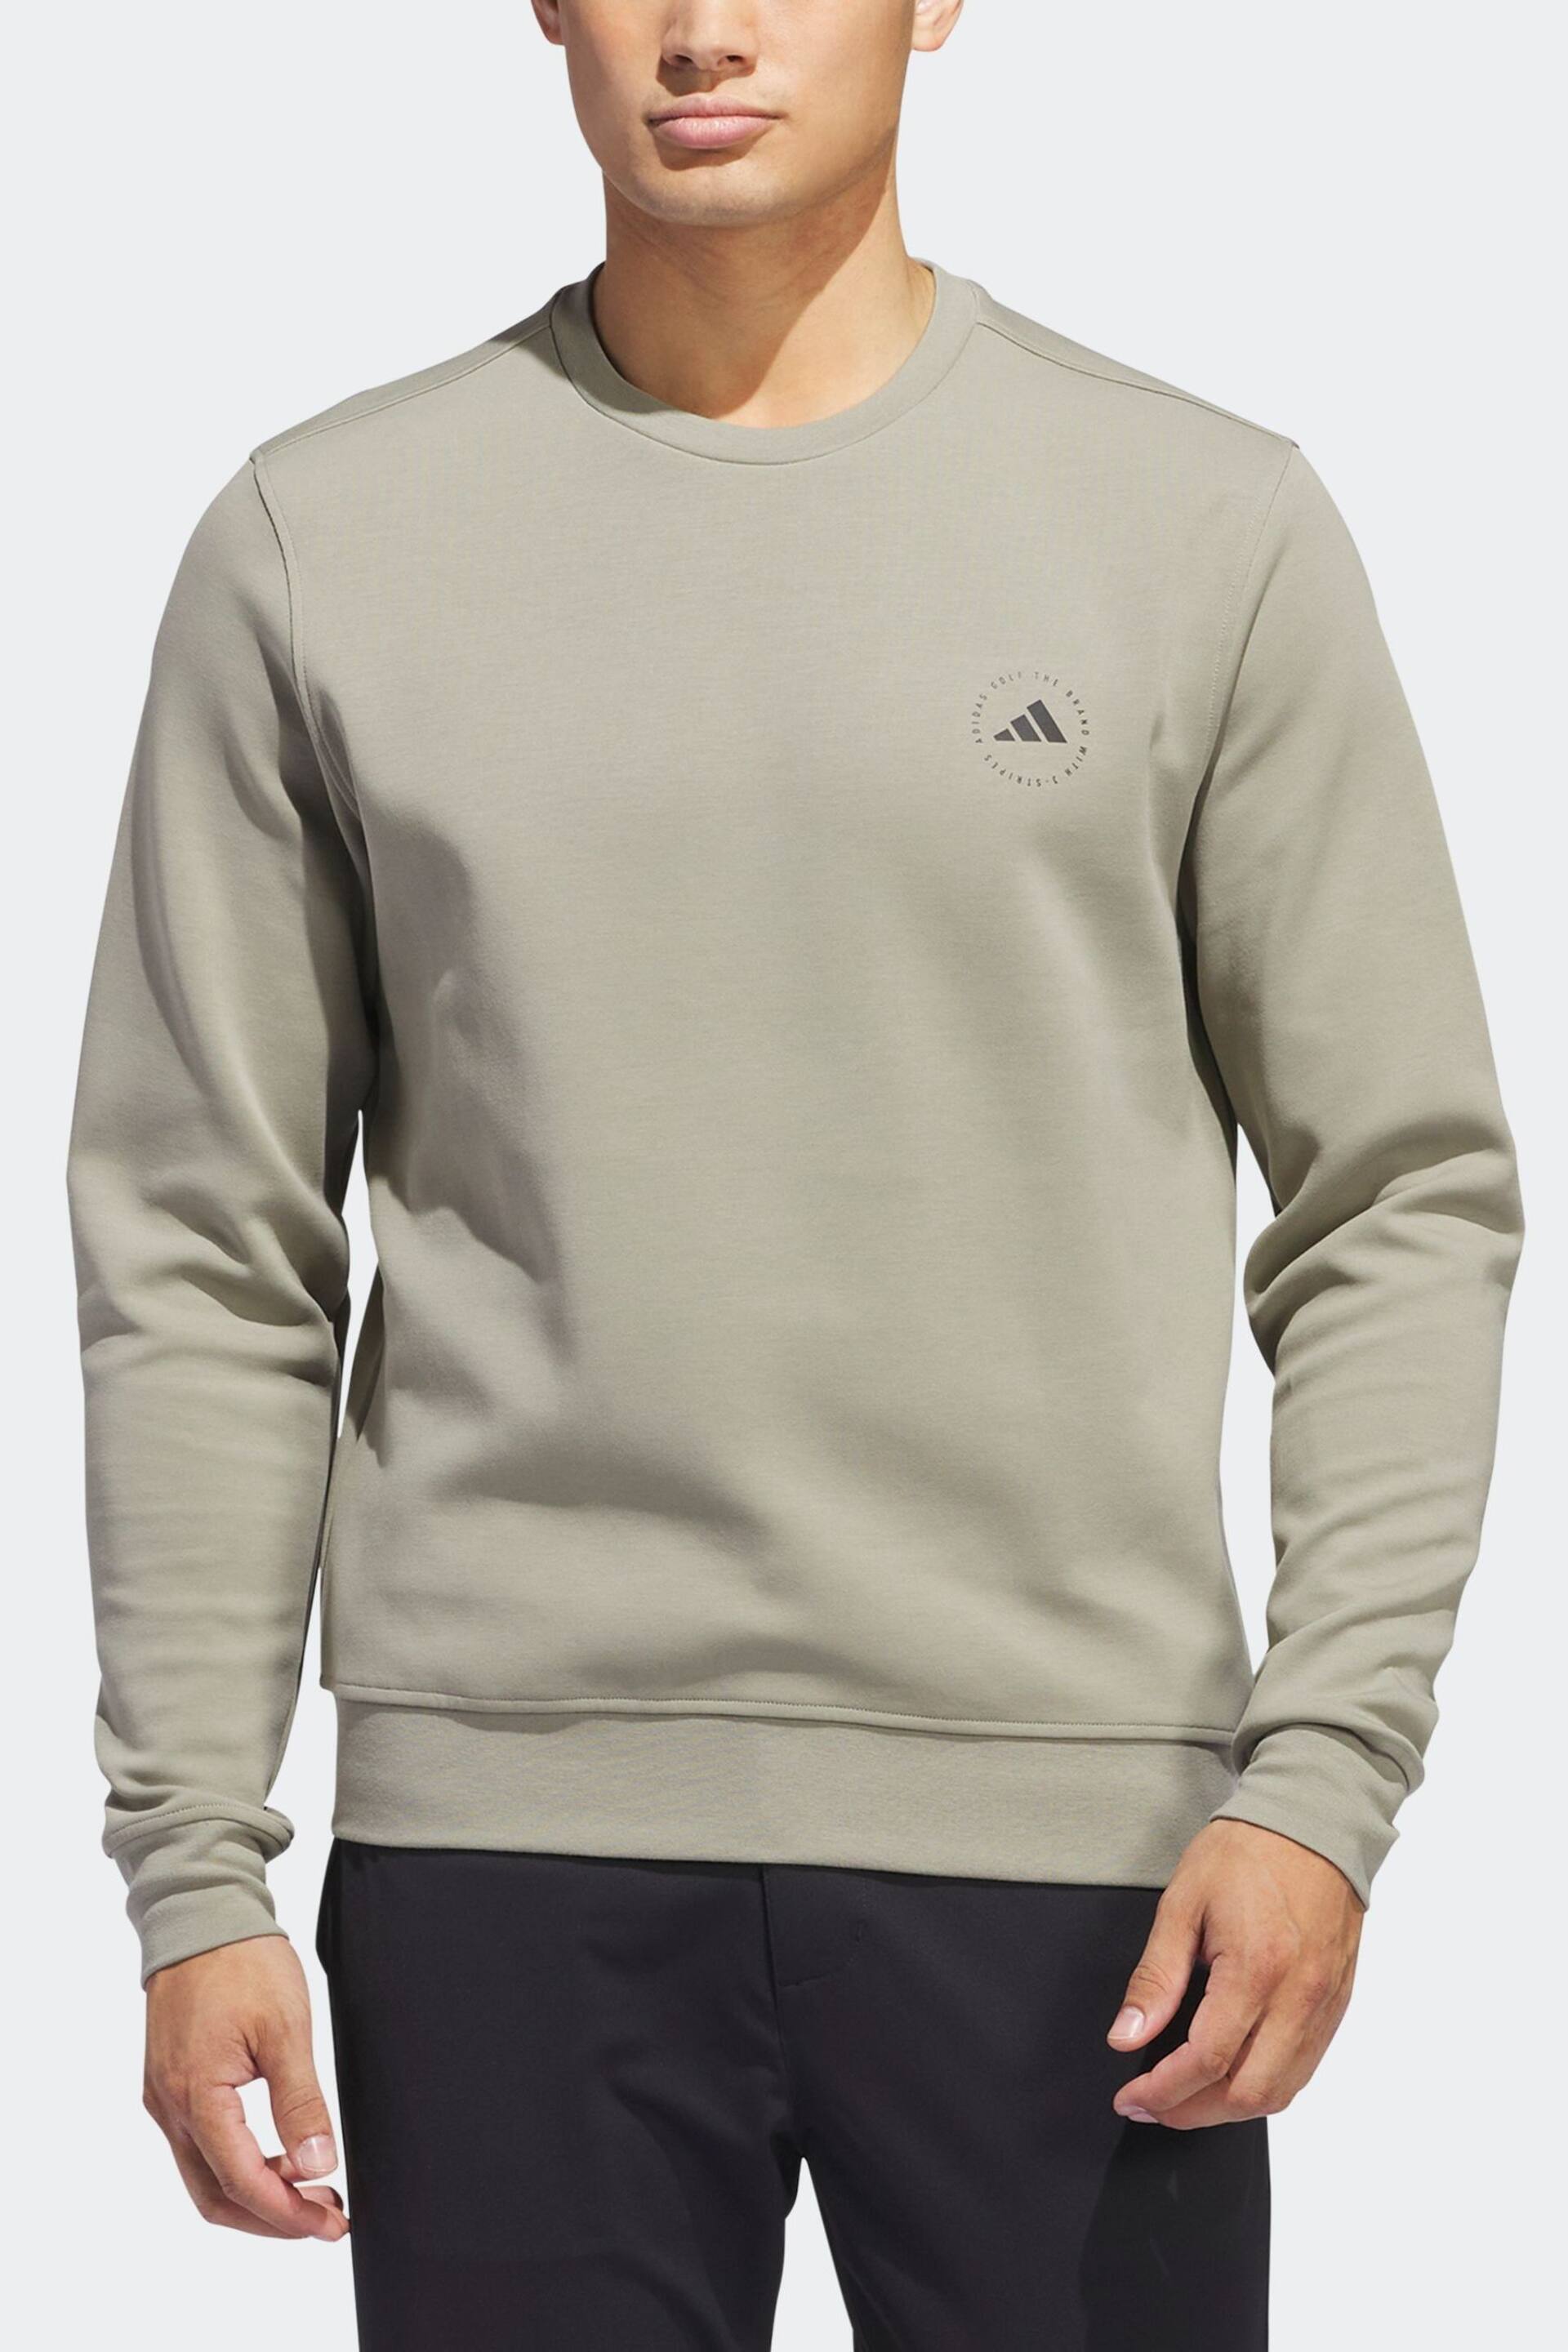 adidas Golf Pebble Crewneck Sweatshirt - Image 3 of 6